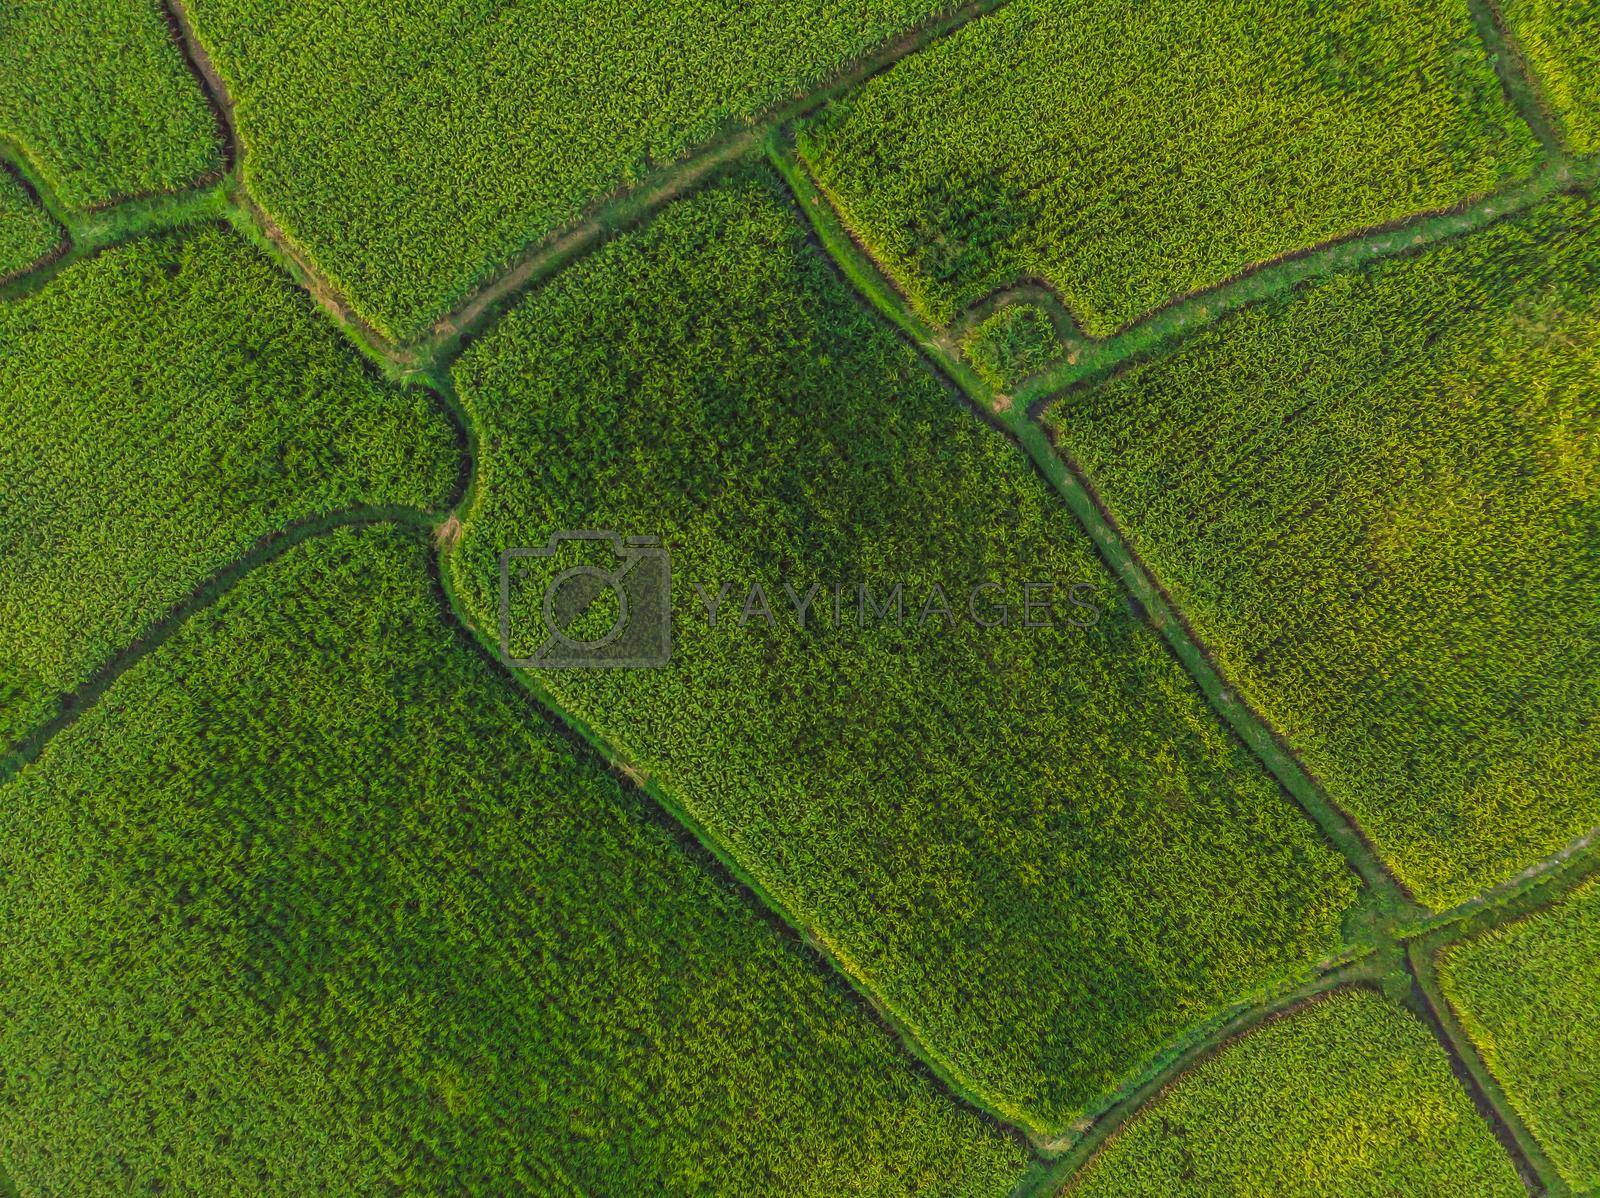 Royalty free image of Rice Terrace Aerial Shot. Image of beautiful terrace rice field by galitskaya